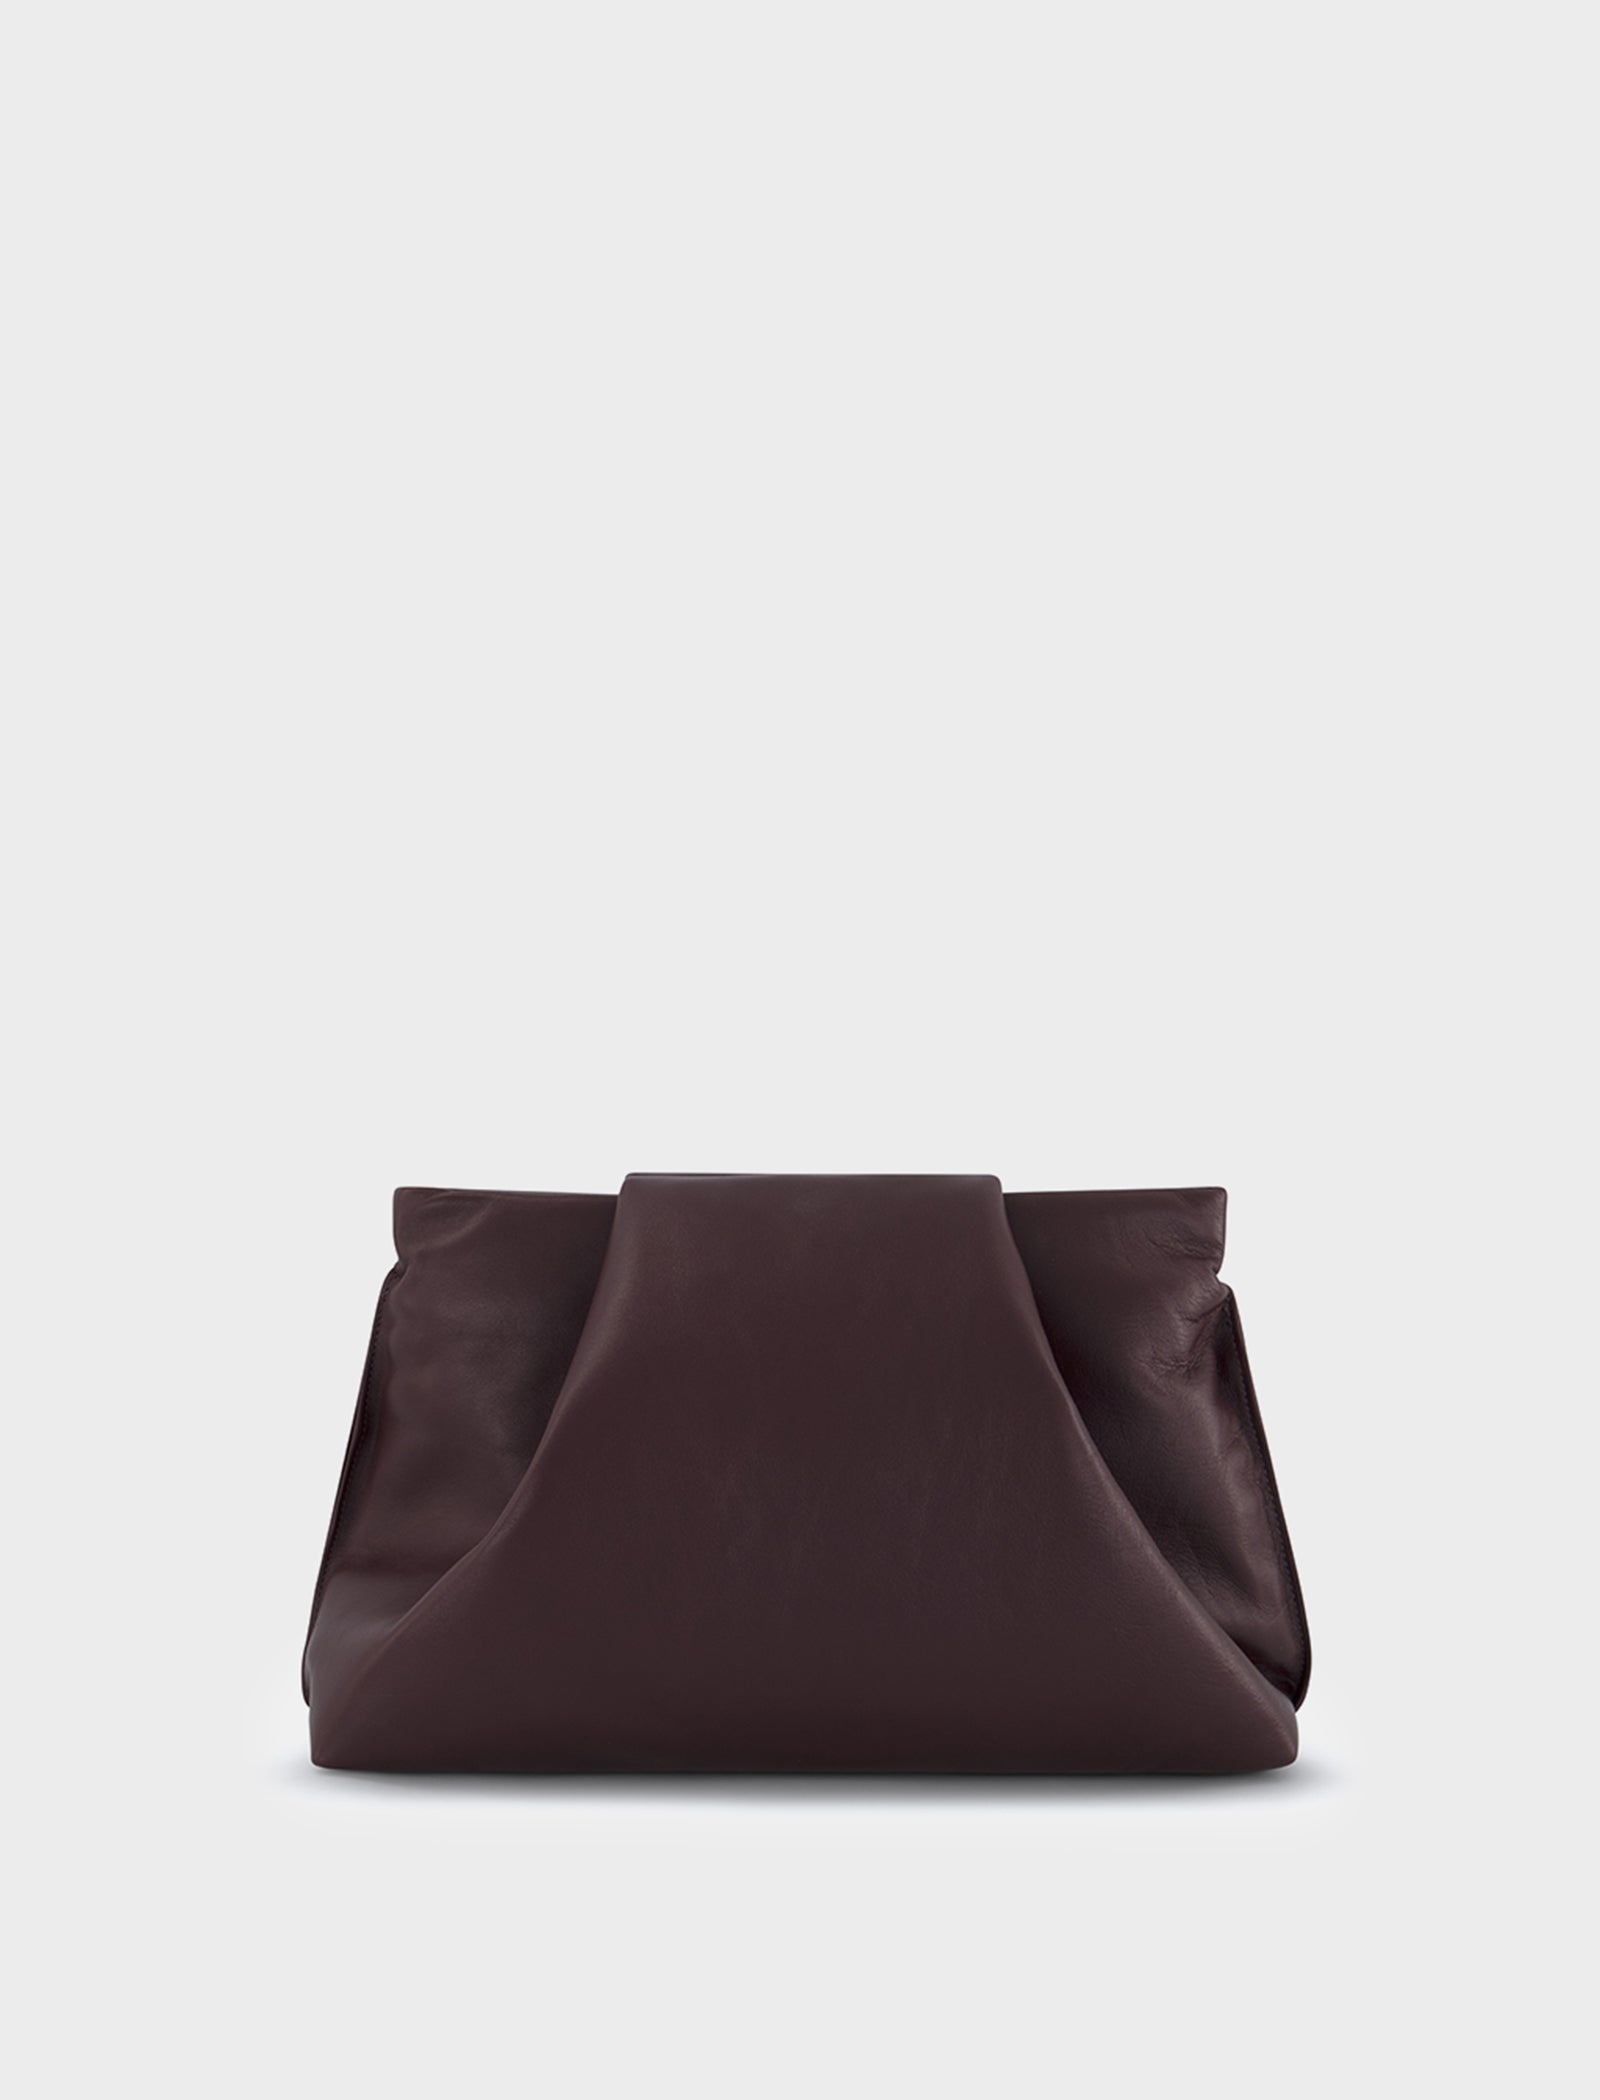 Burgundy Clutch | Leather | Handmade | Australian | A-ESQUE